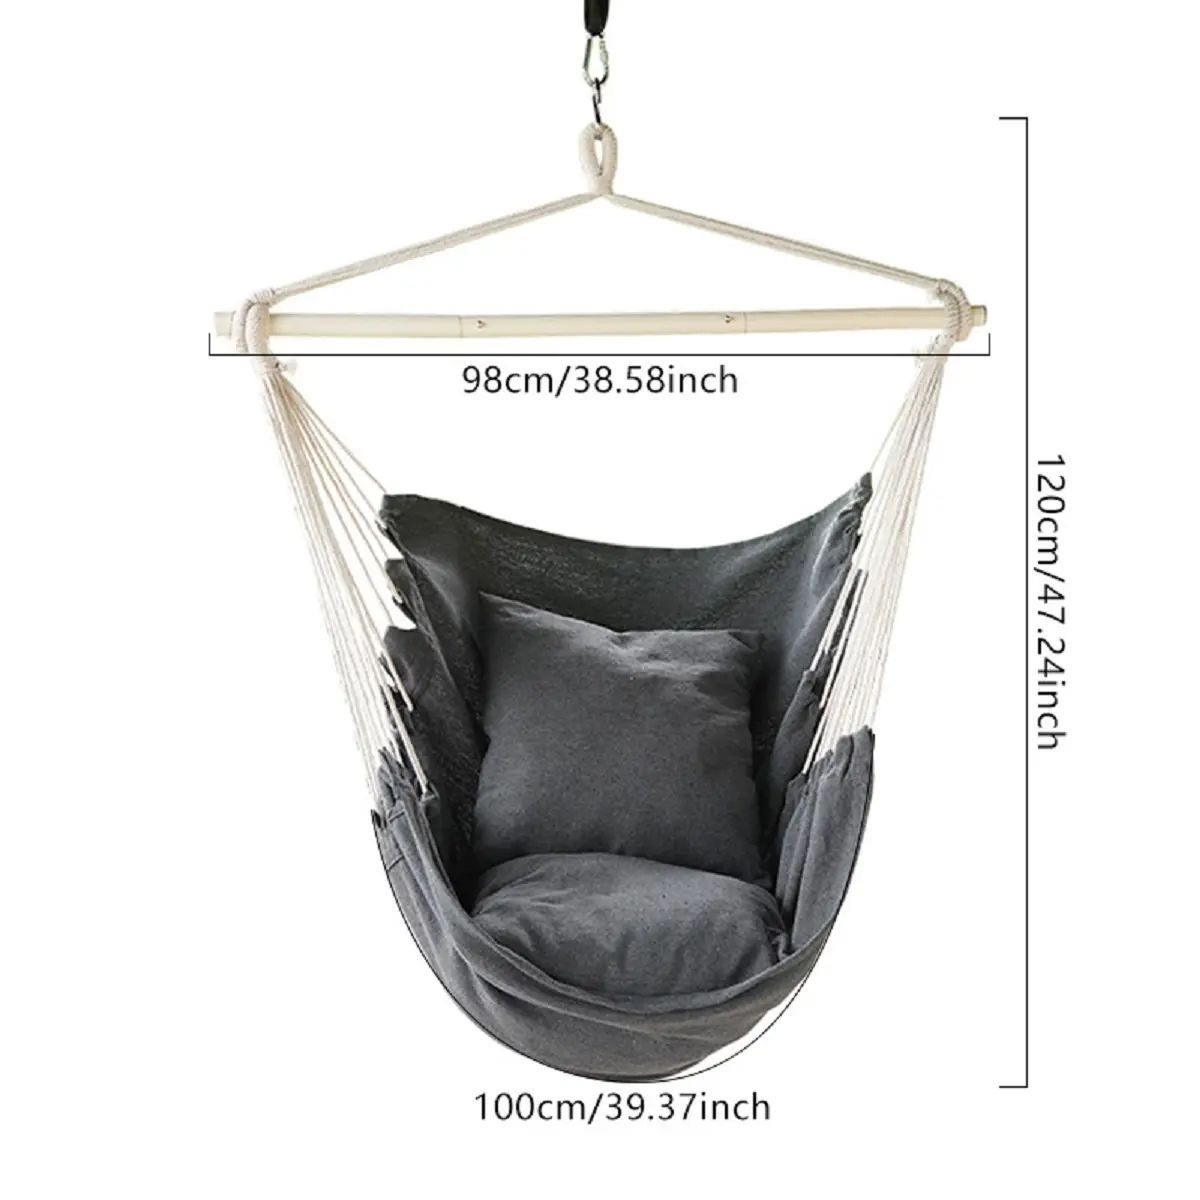 Iron bar gray canvas swing hammock hanging chair